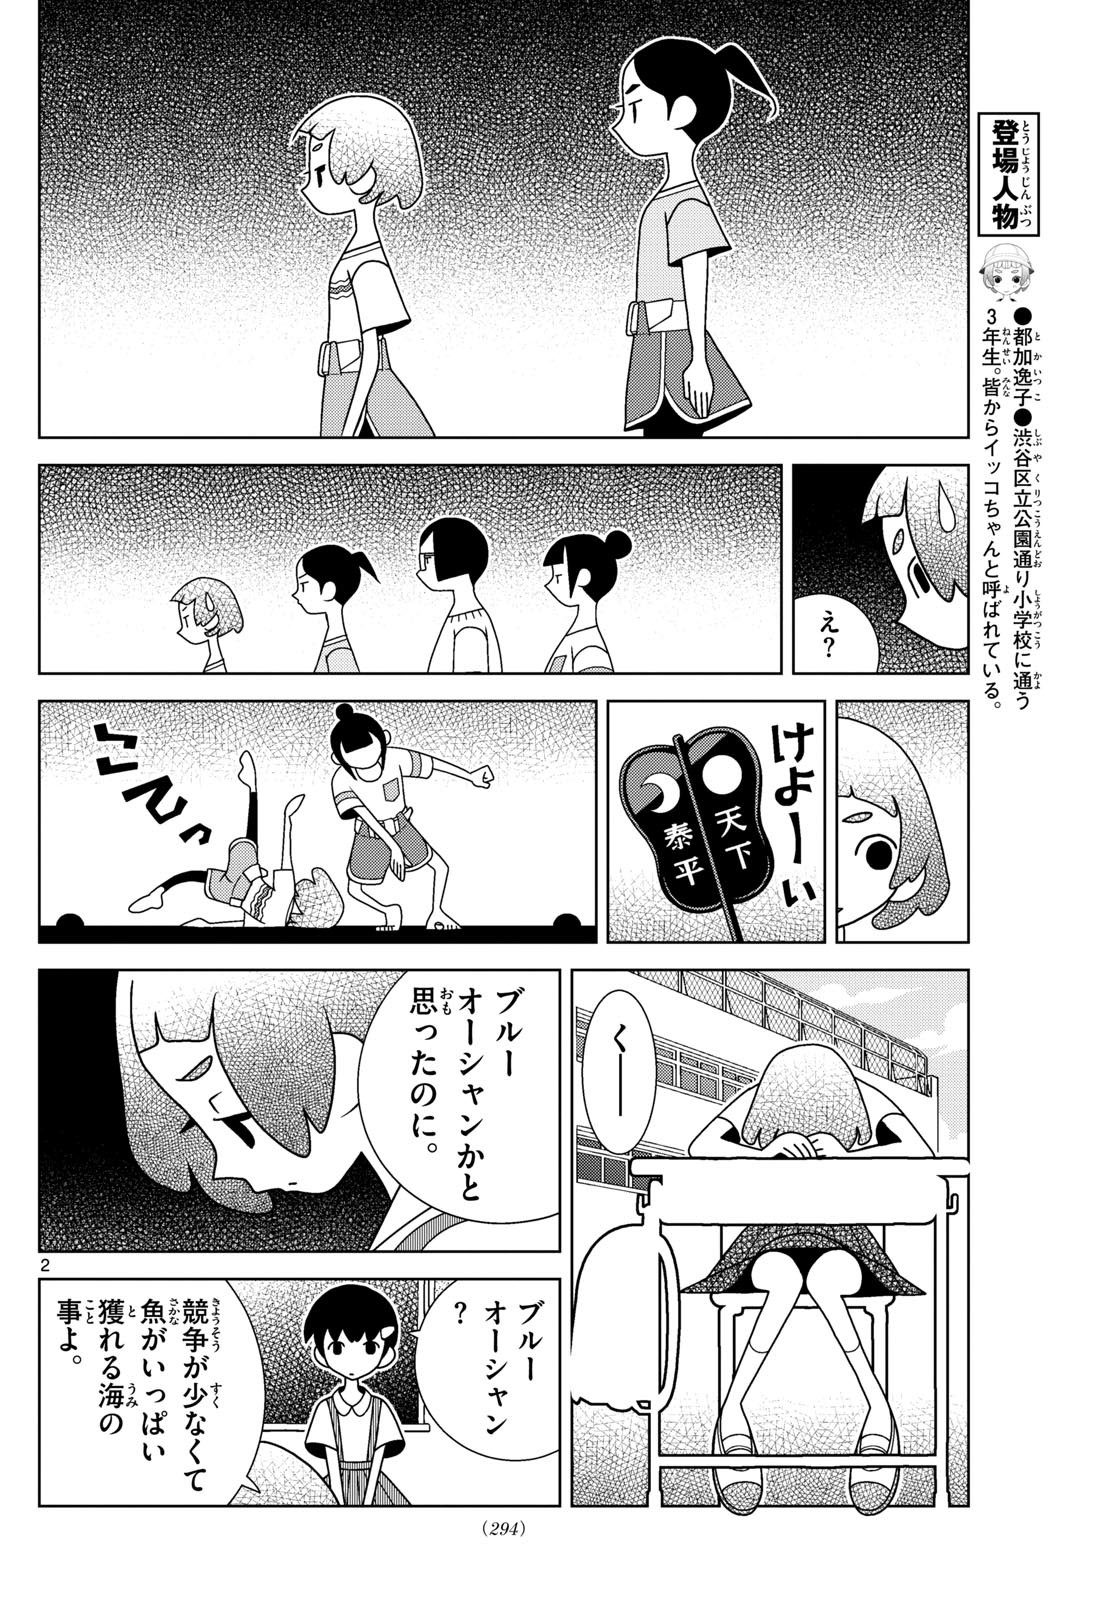 Shibuya Near Family - Chapter 064 - Page 2